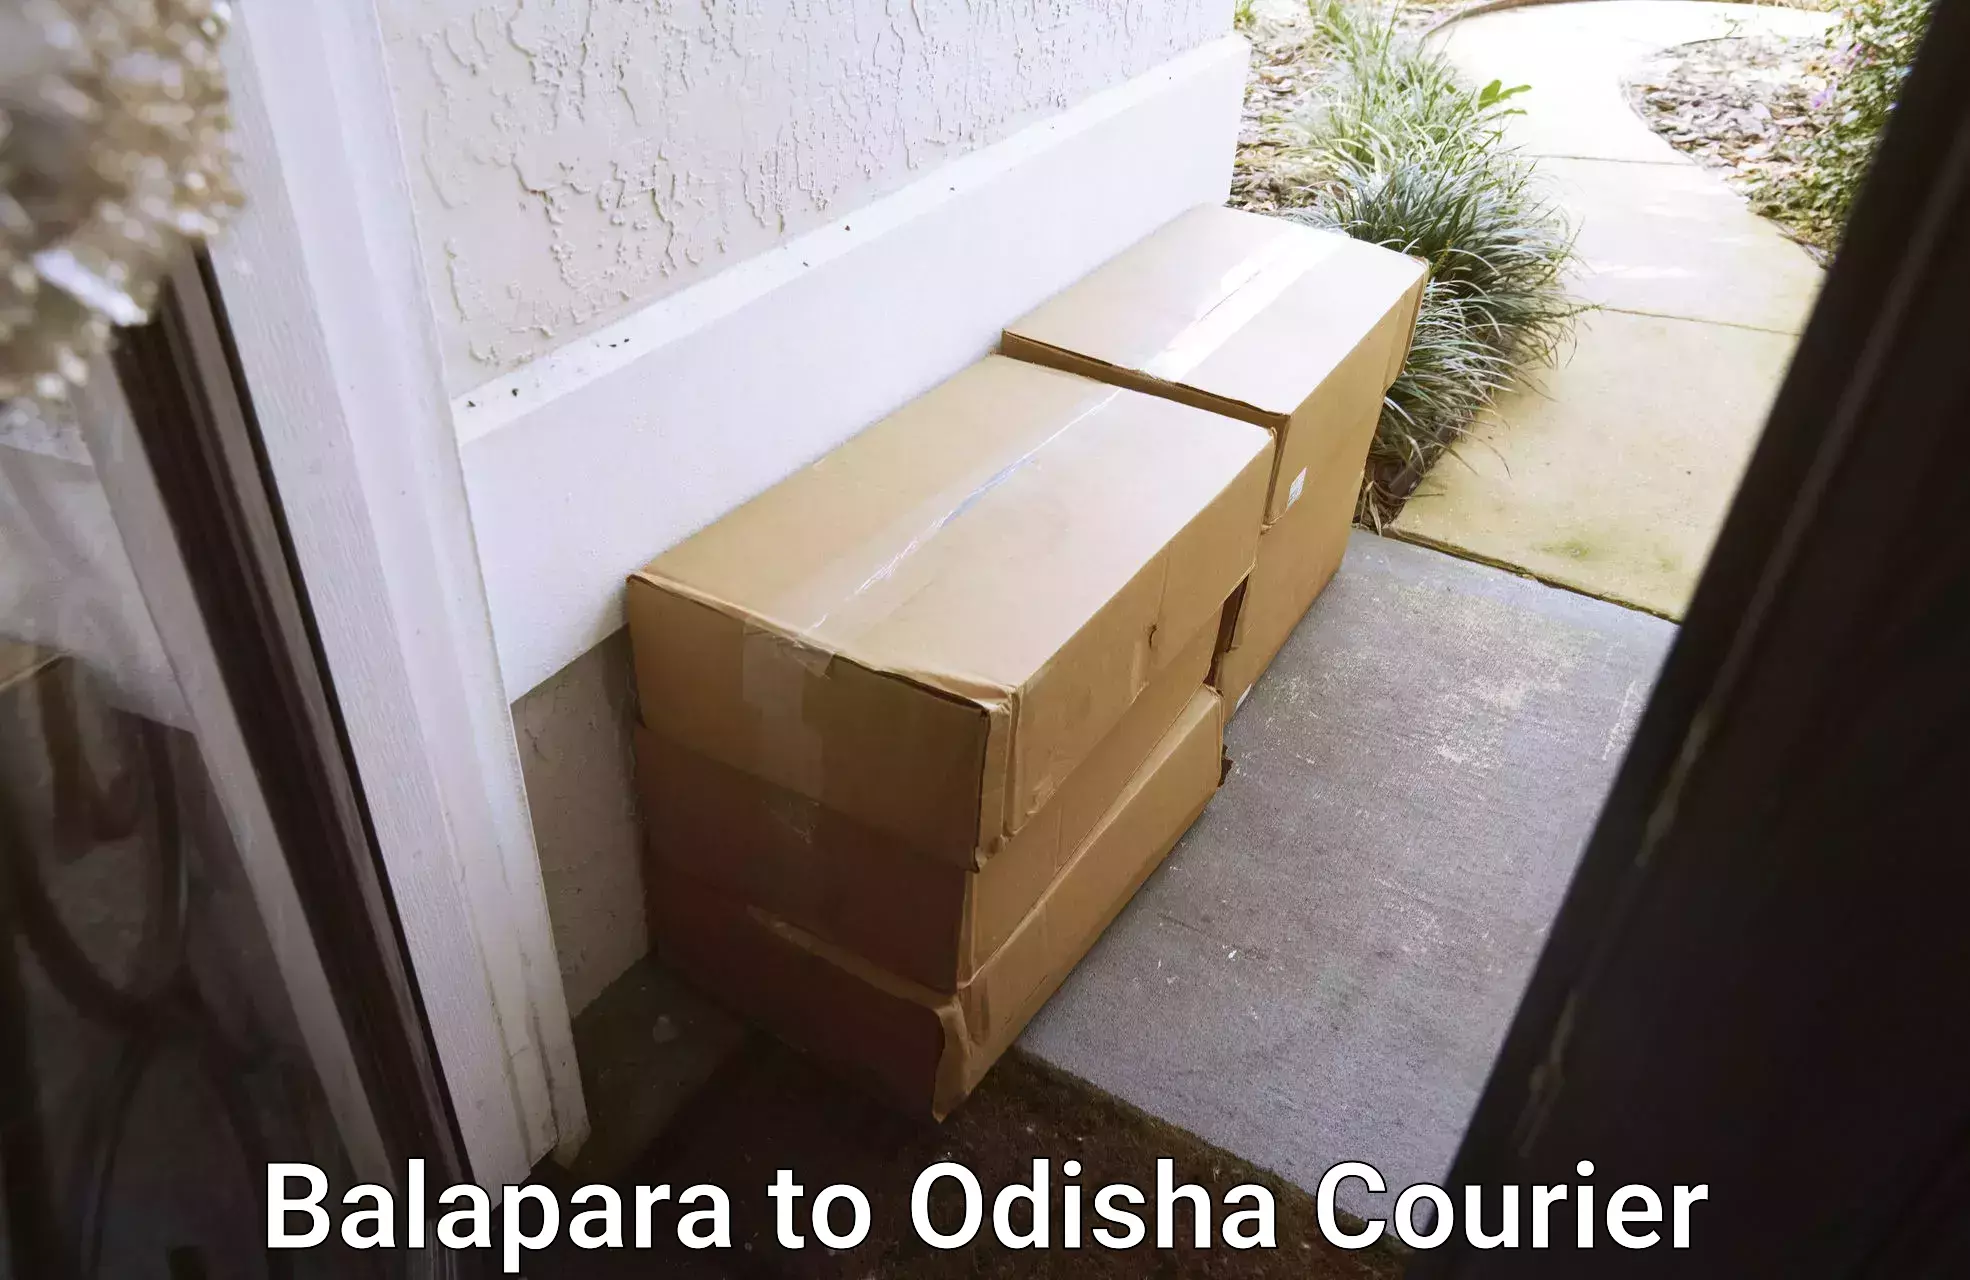 Courier service innovation Balapara to Balinga